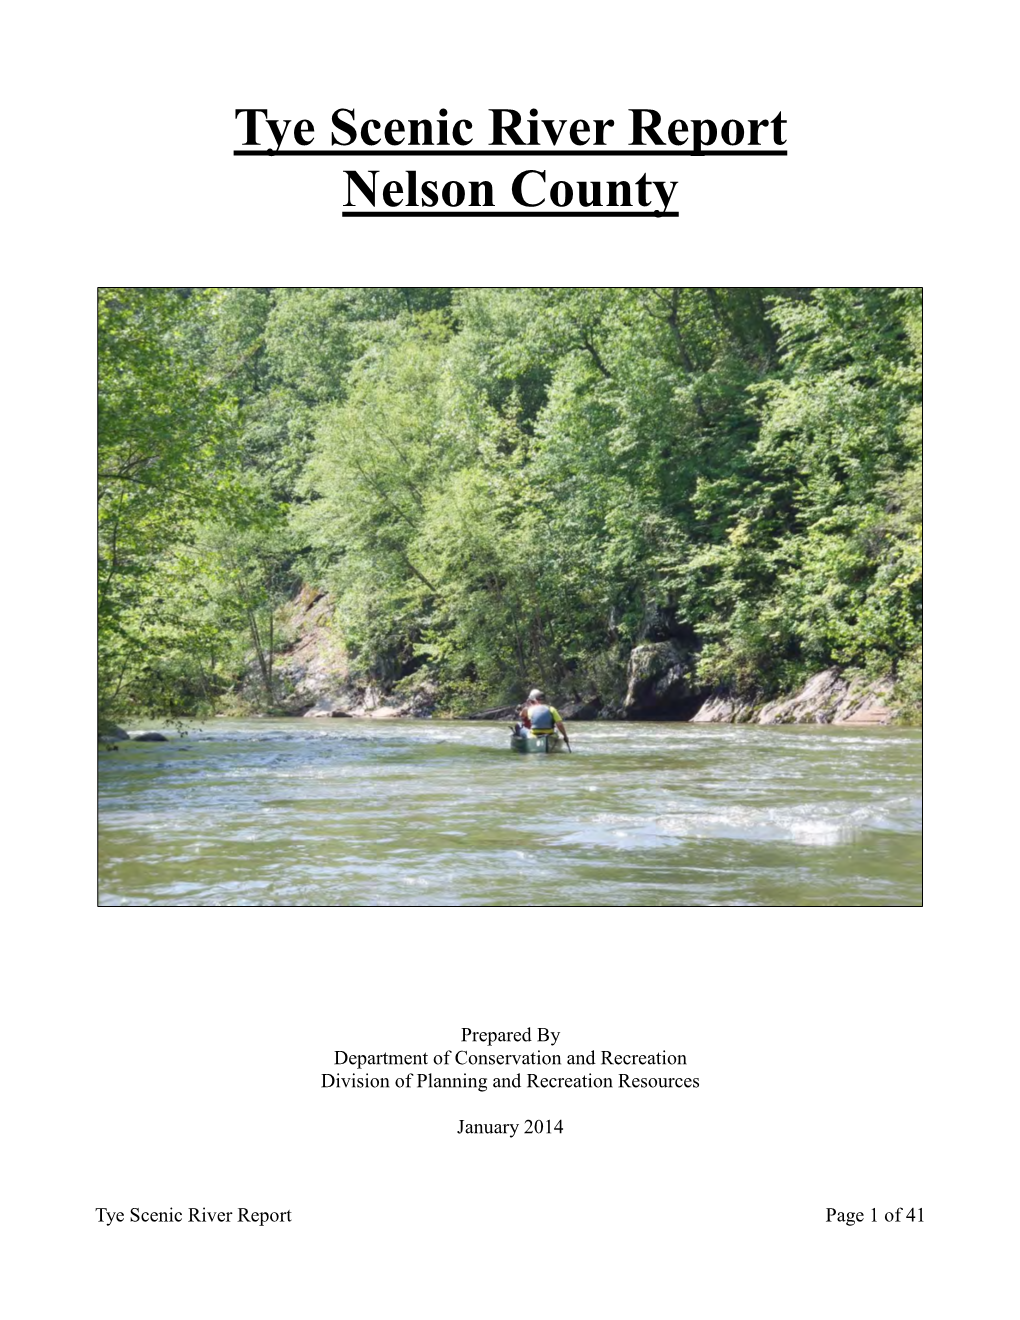 Tye Scenic River Report: Nelson County